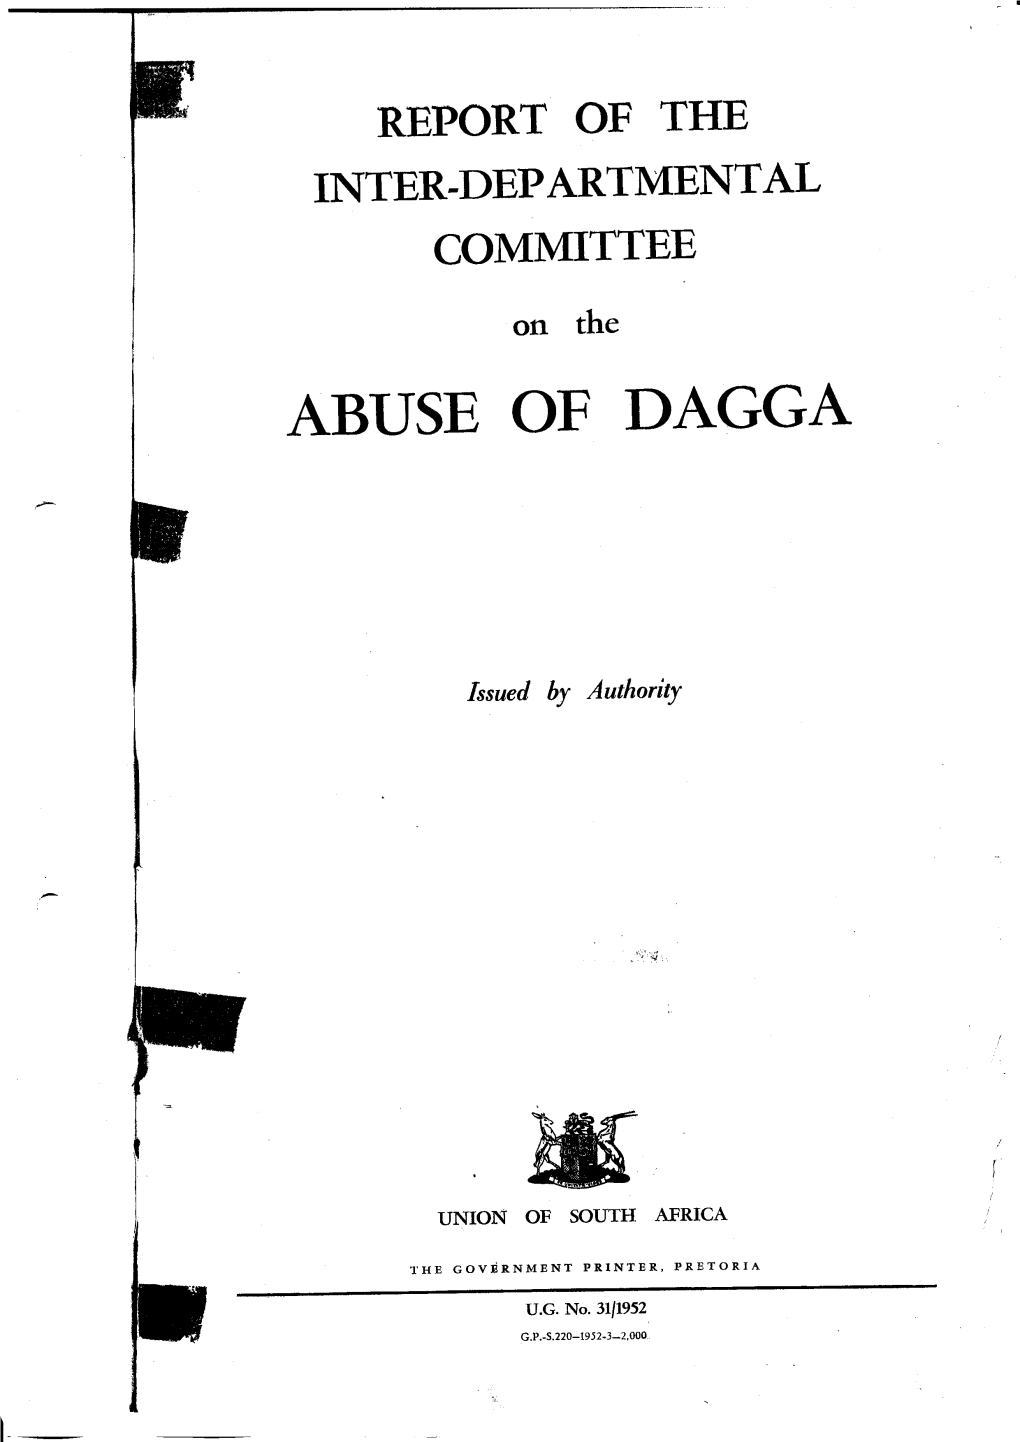 Abuse of Dagga